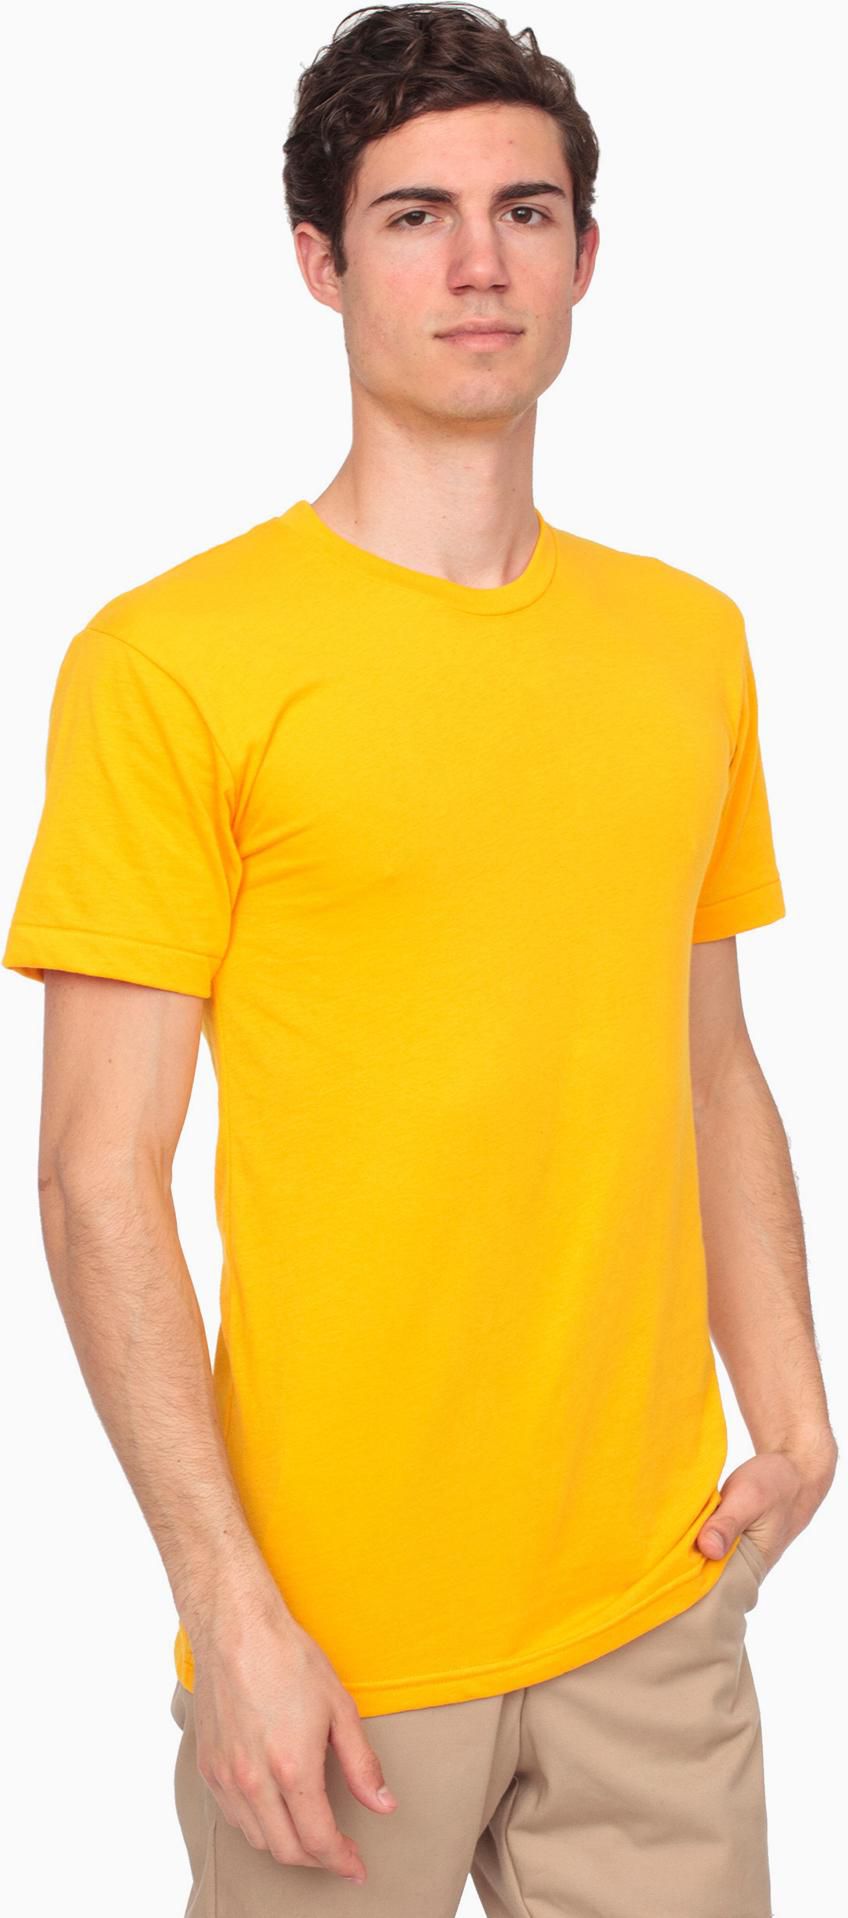 American Apparel Men's Poly-cotton Crew Neck T-shirt